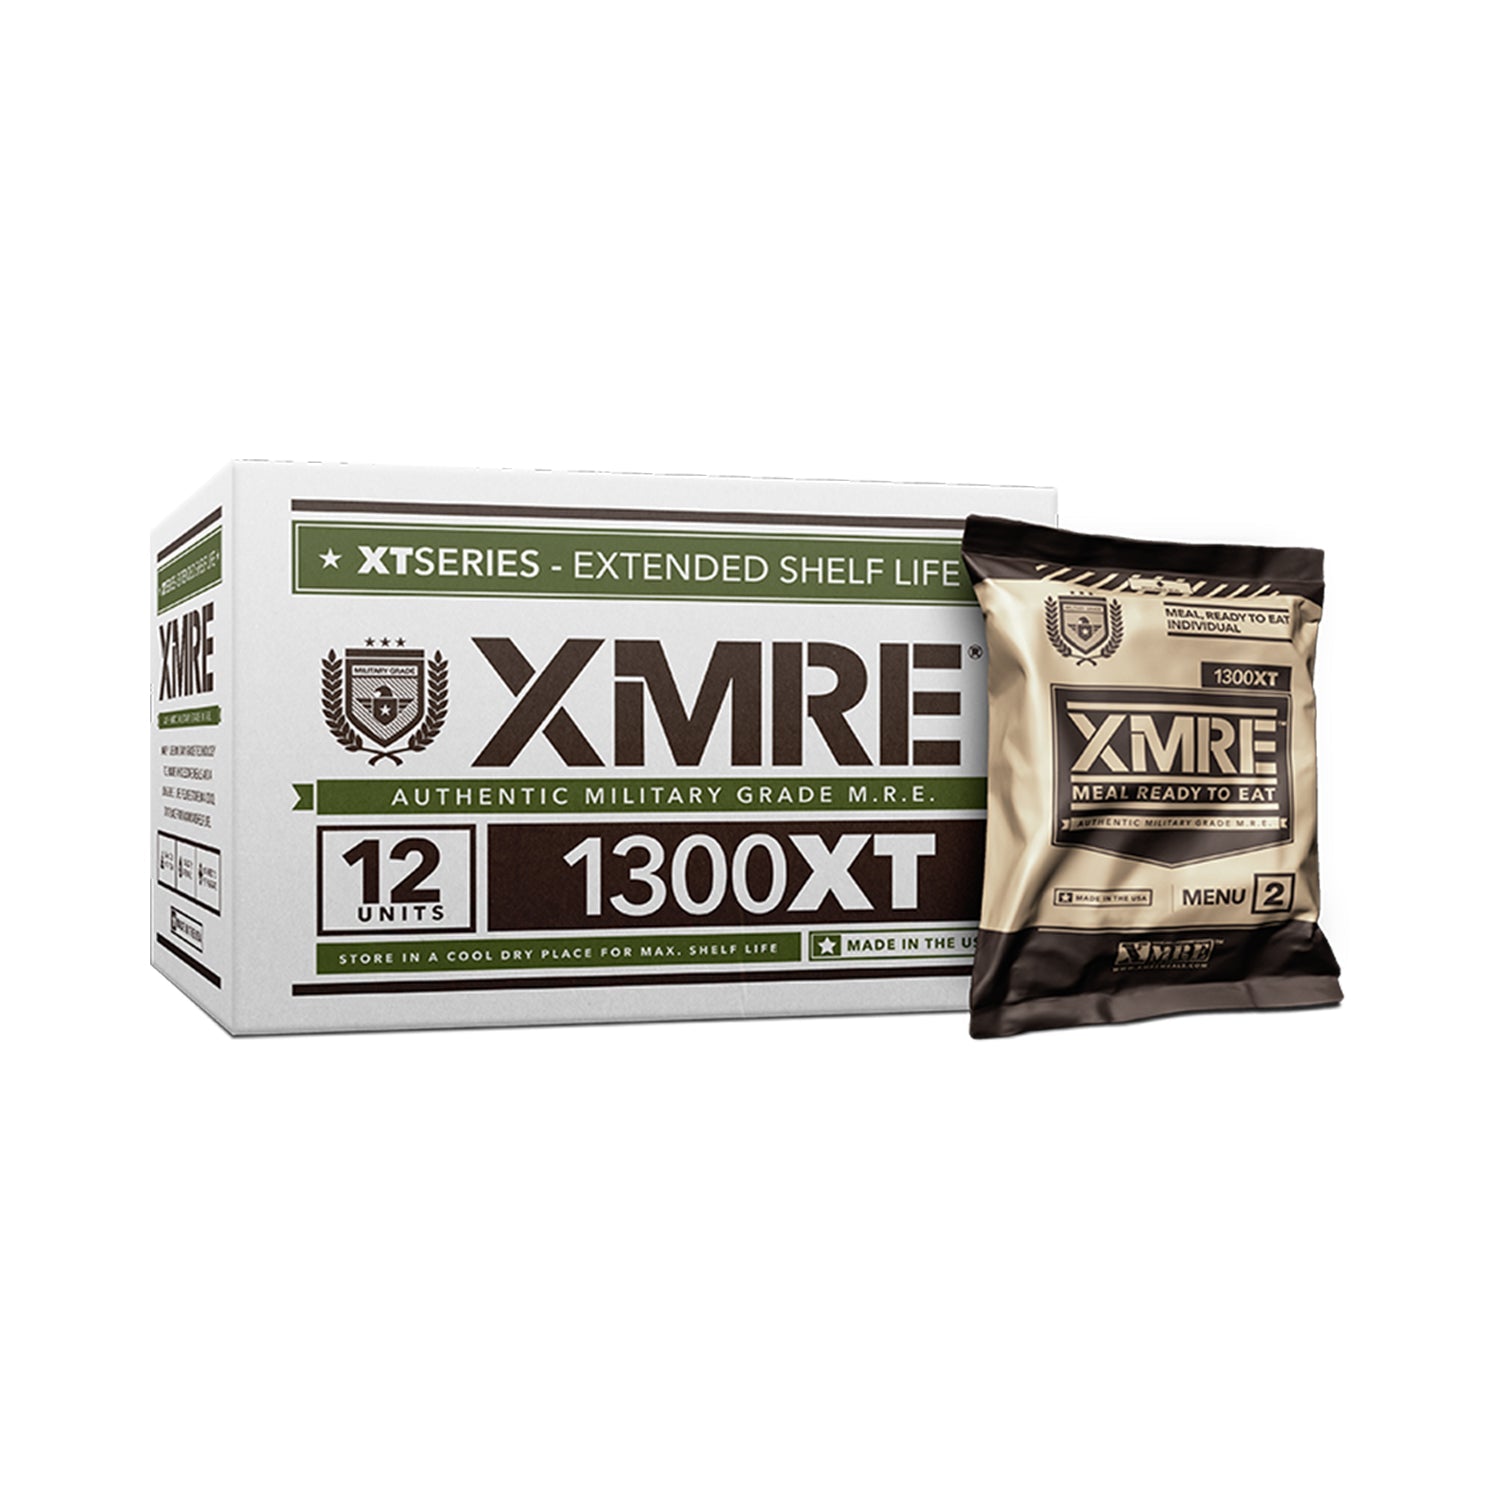 Image of XMRE 1300XT – CASE OF 12 FRH– 6 MENUS